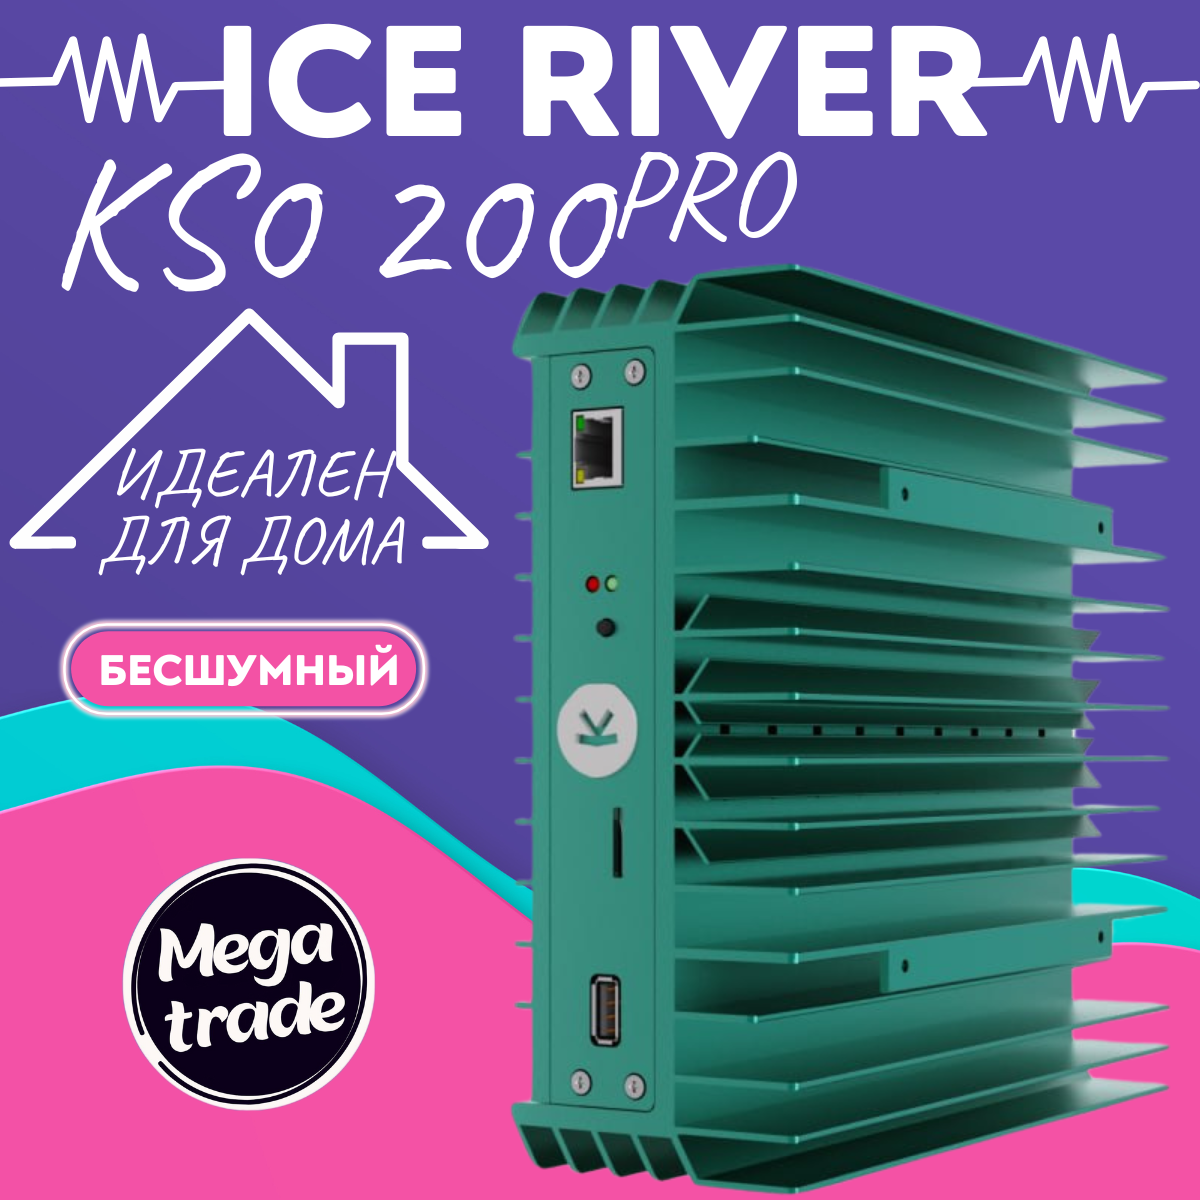 Майнер ICE RIVER KS0 200 pro